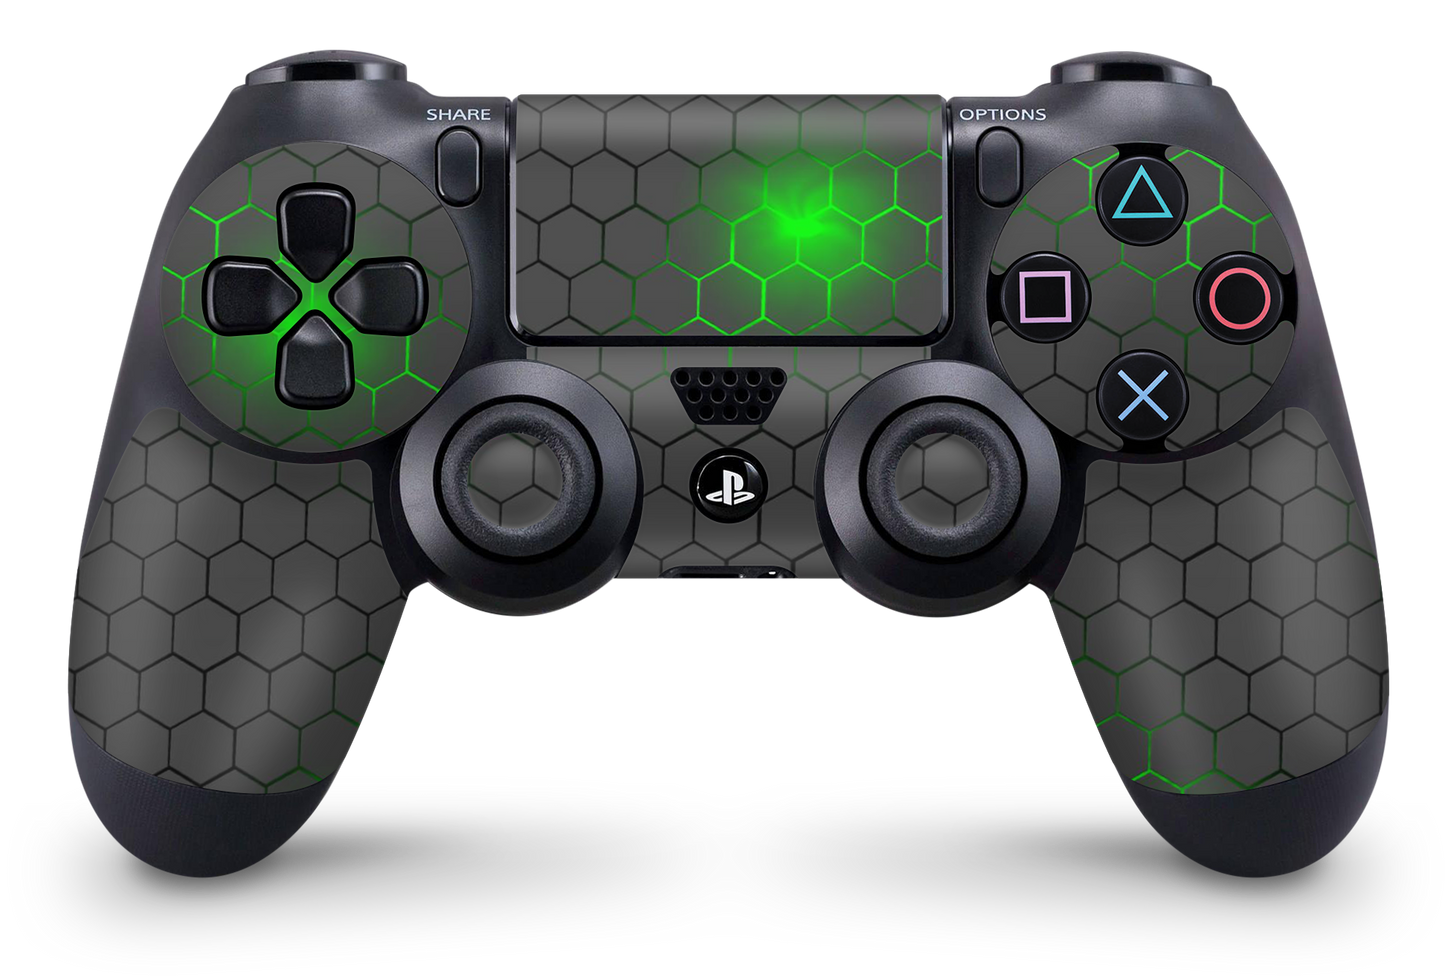 PS4 Playstation 4 Controller Skins - Vinyl Skin Aufkleber für Gaming Controller Exo small green Aufkleber Skins4u   